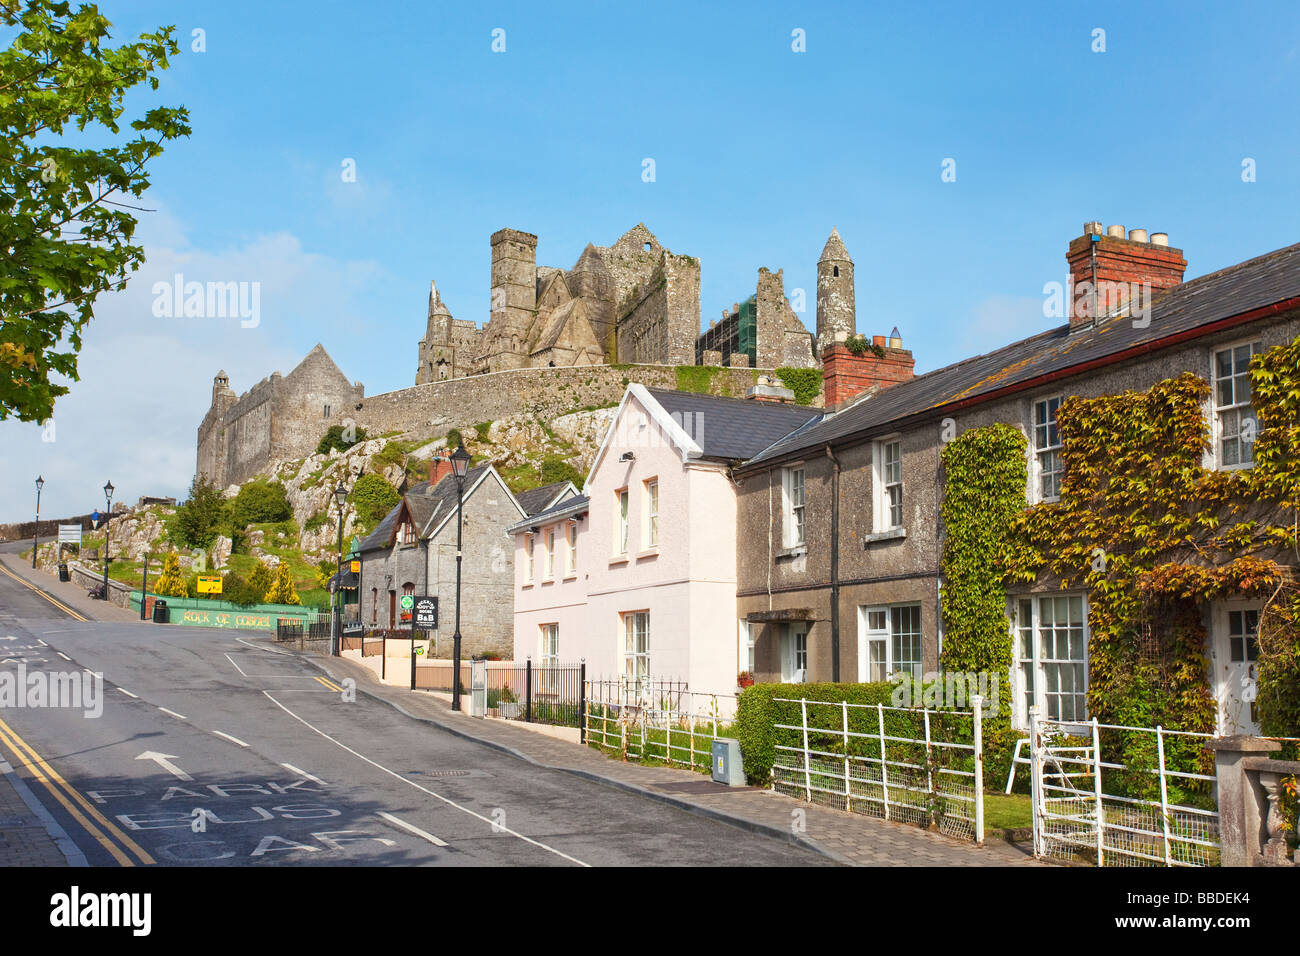 Rock of Cashel County Tipperary Irland Irland Irland Europa EU Stockfoto